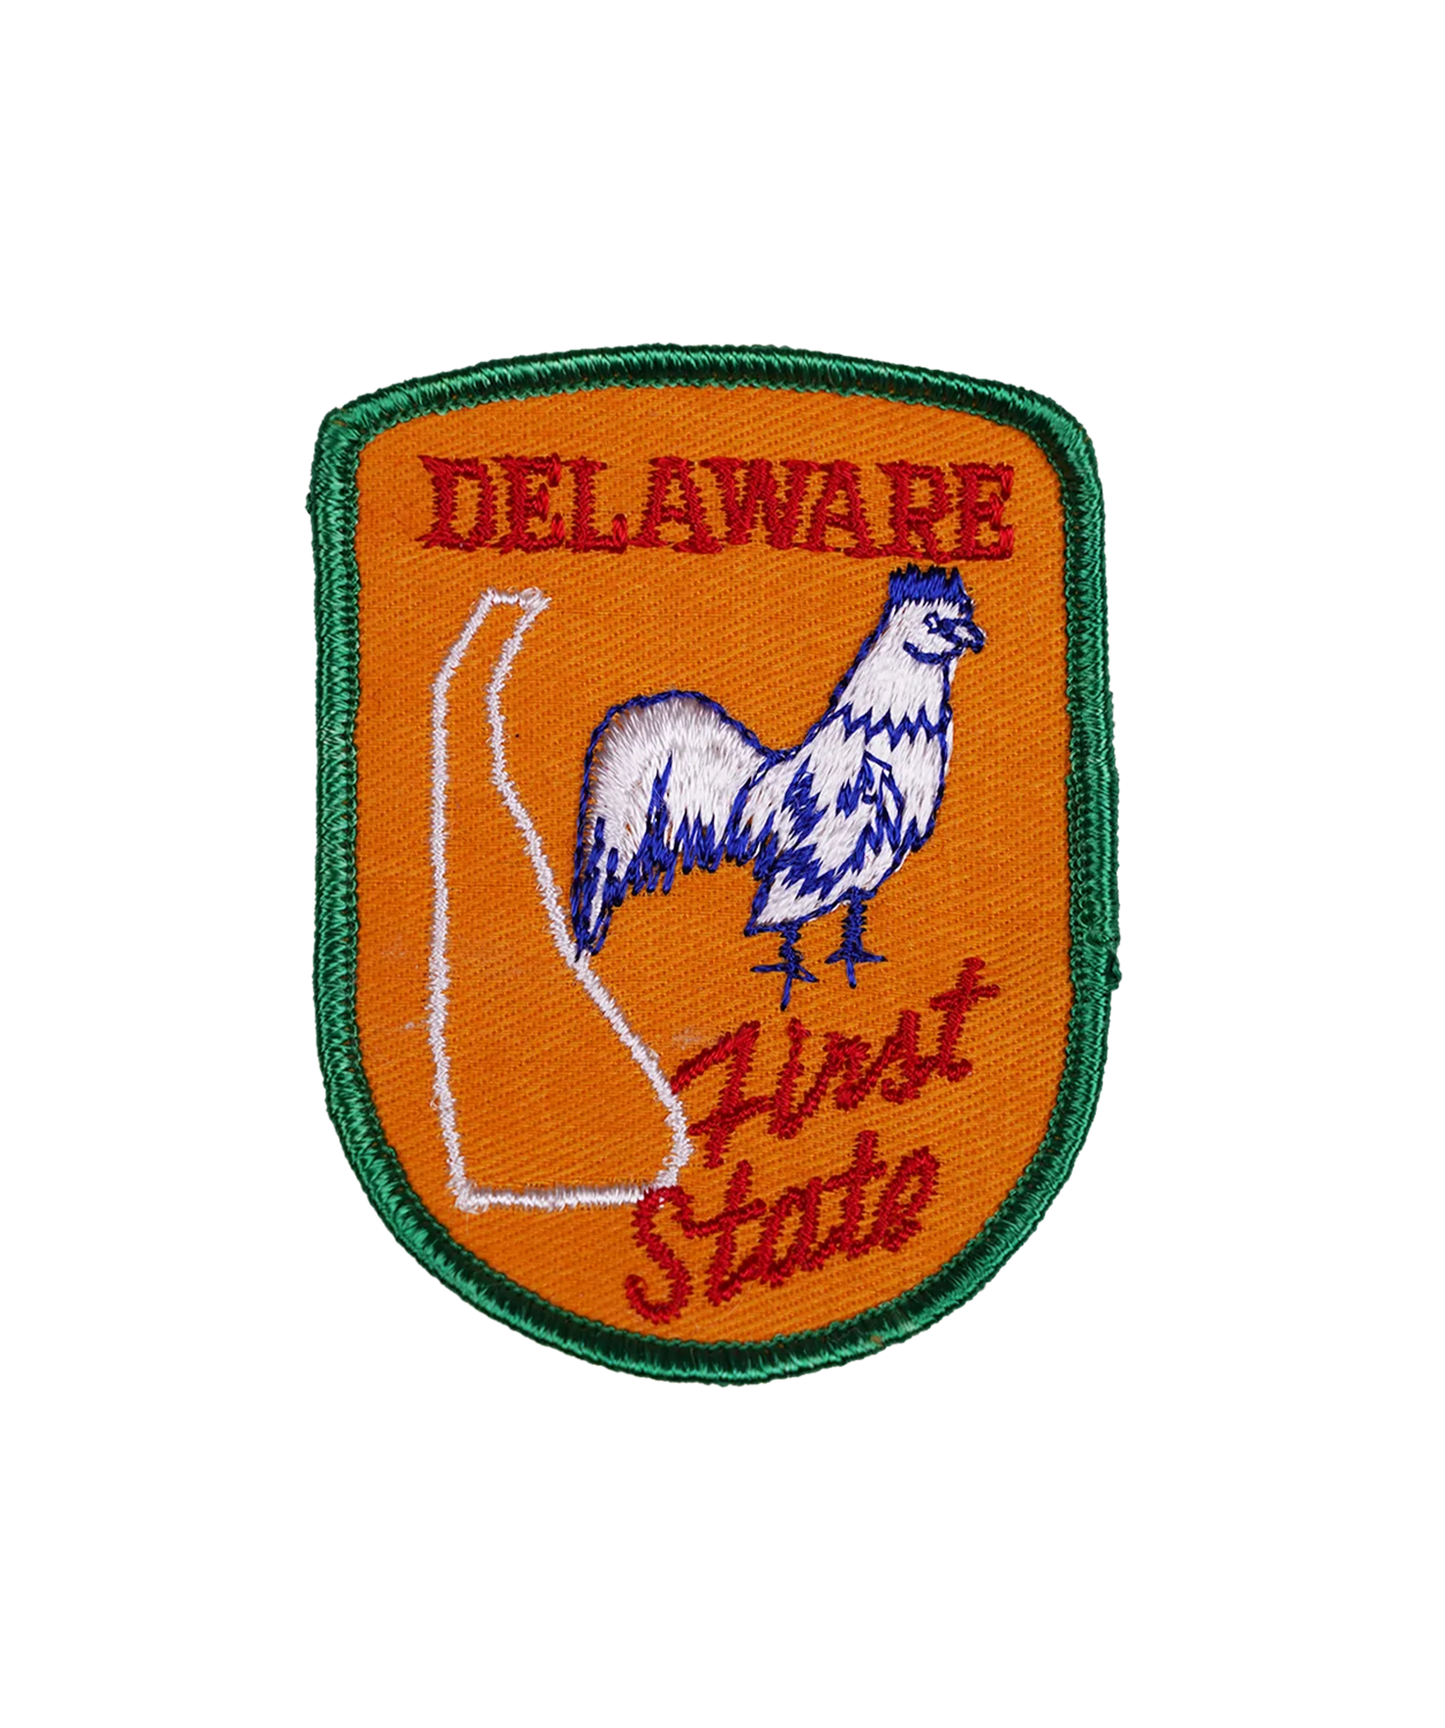 Vintage Delaware Embroidered Patch